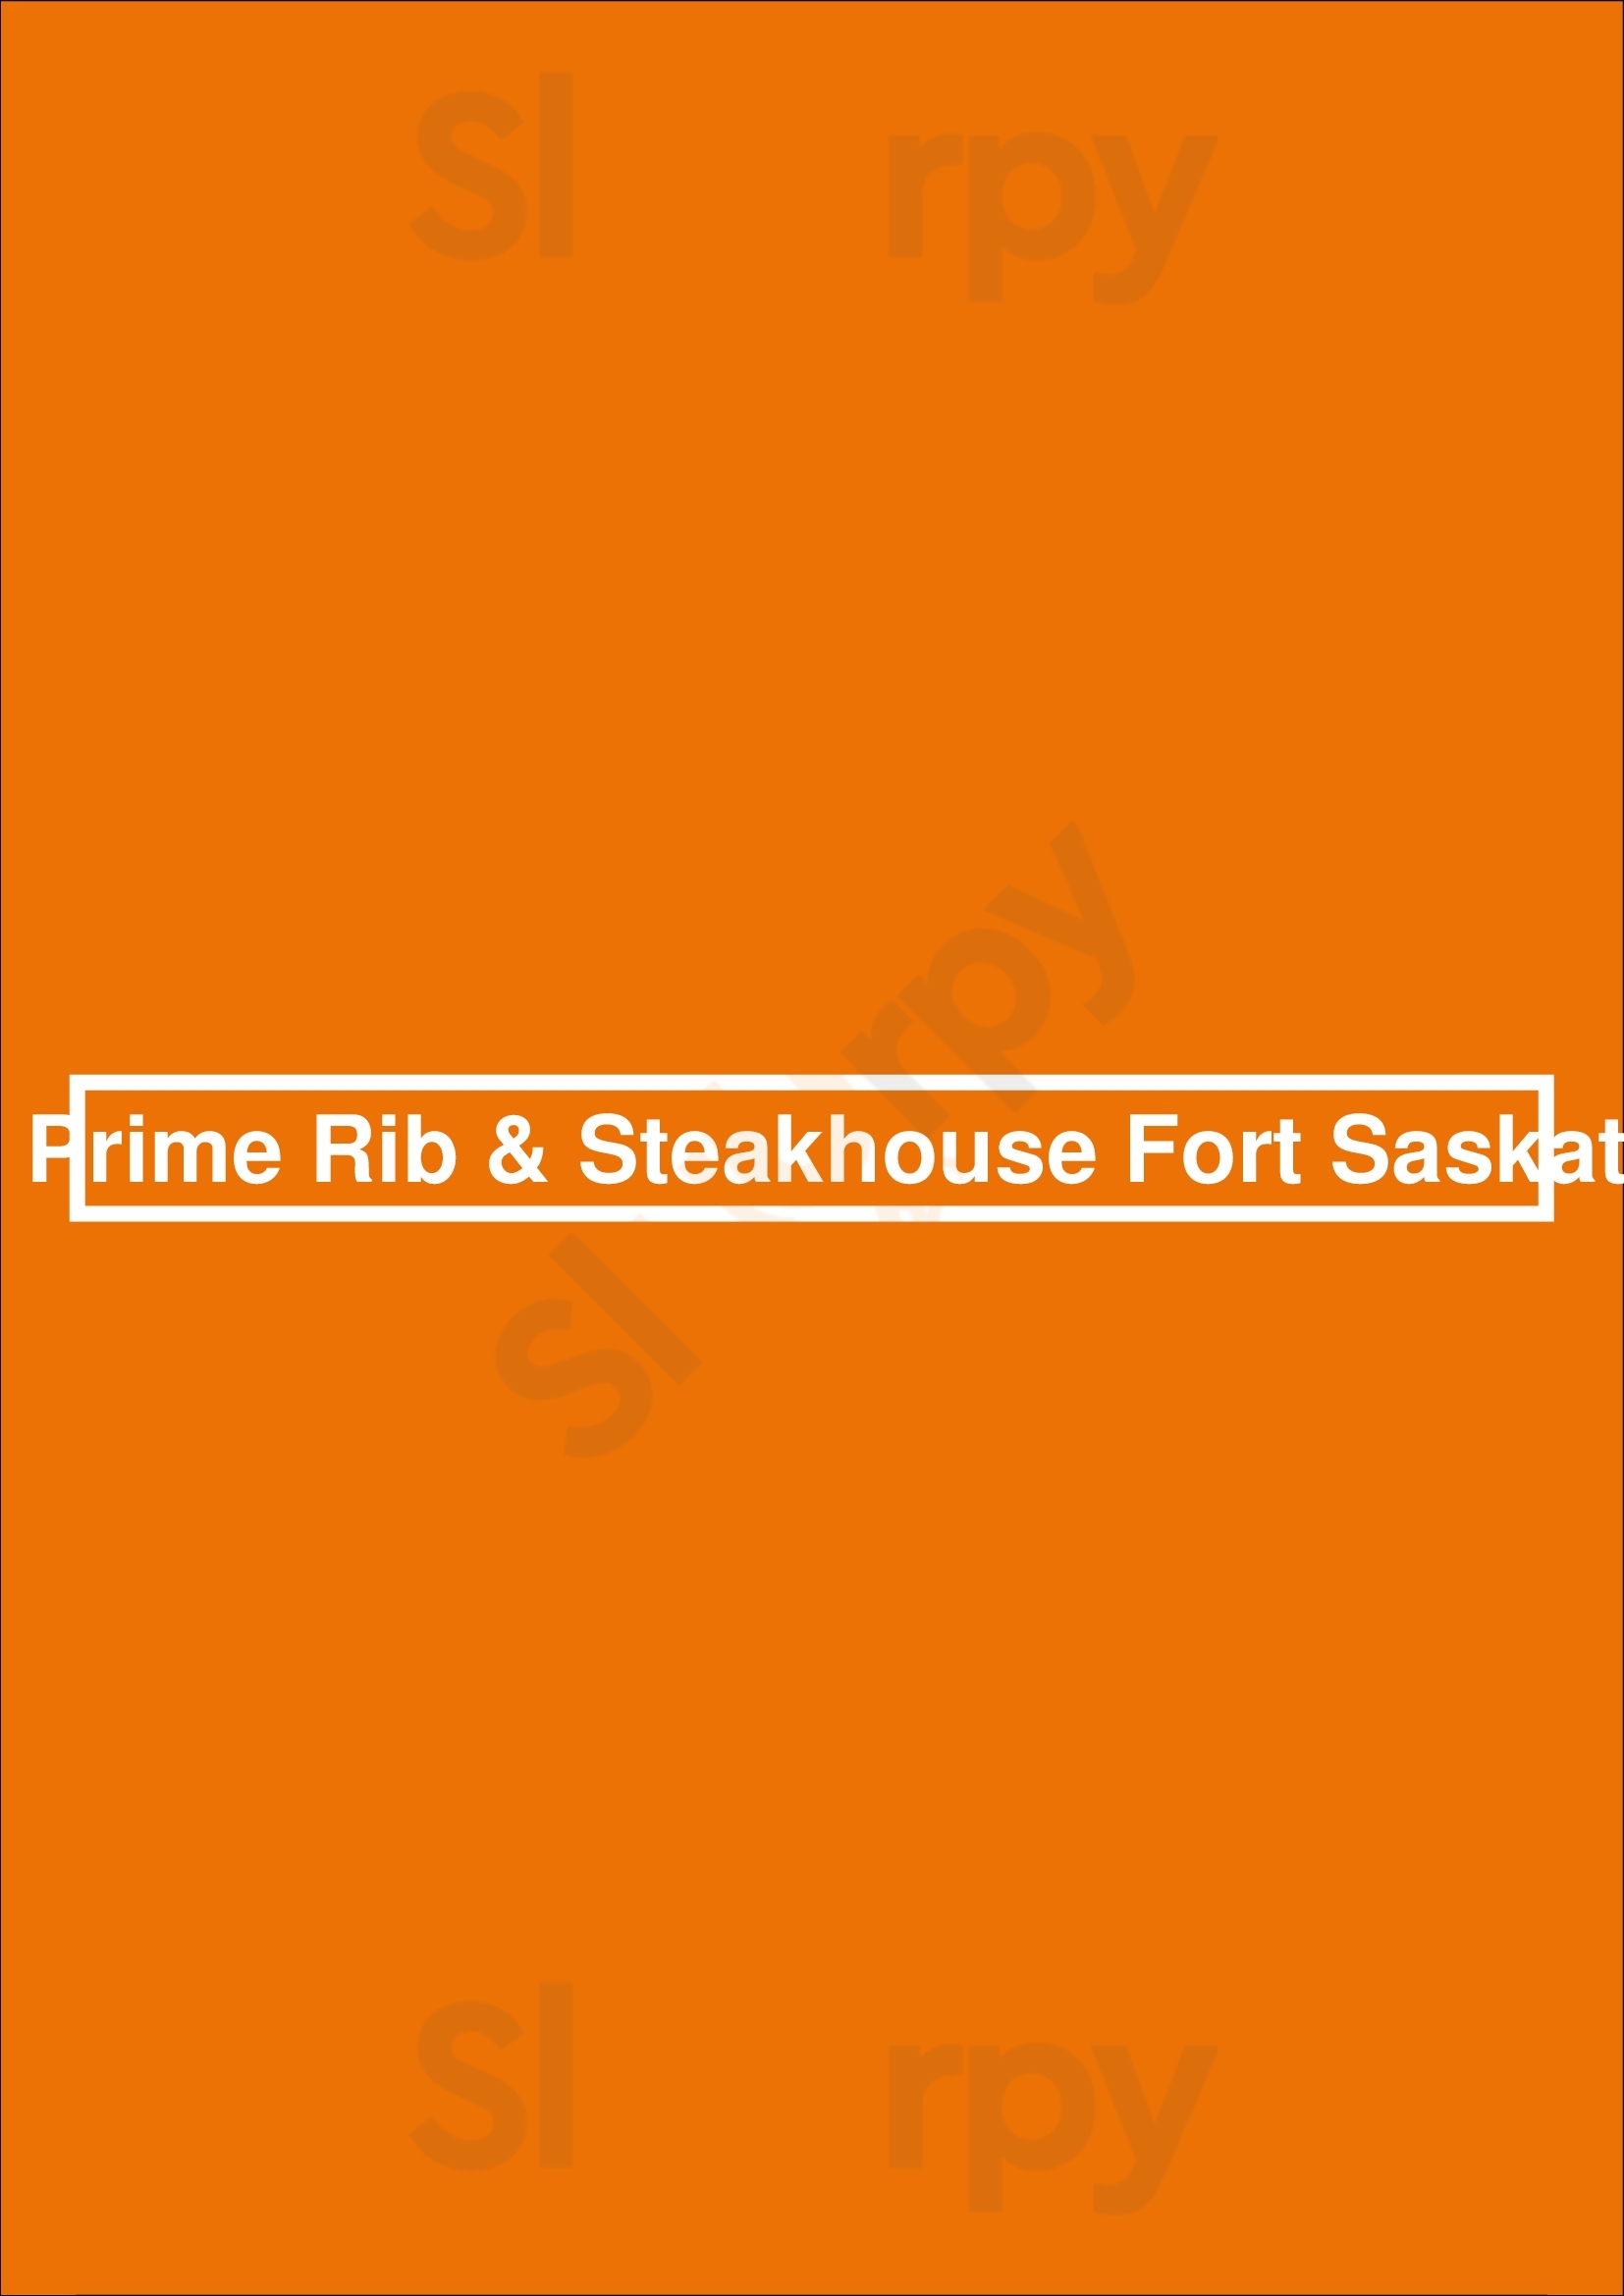 Sawmill Prime Rib & Steakhouse Fort Saskatchewan Fort Saskatchewan Menu - 1